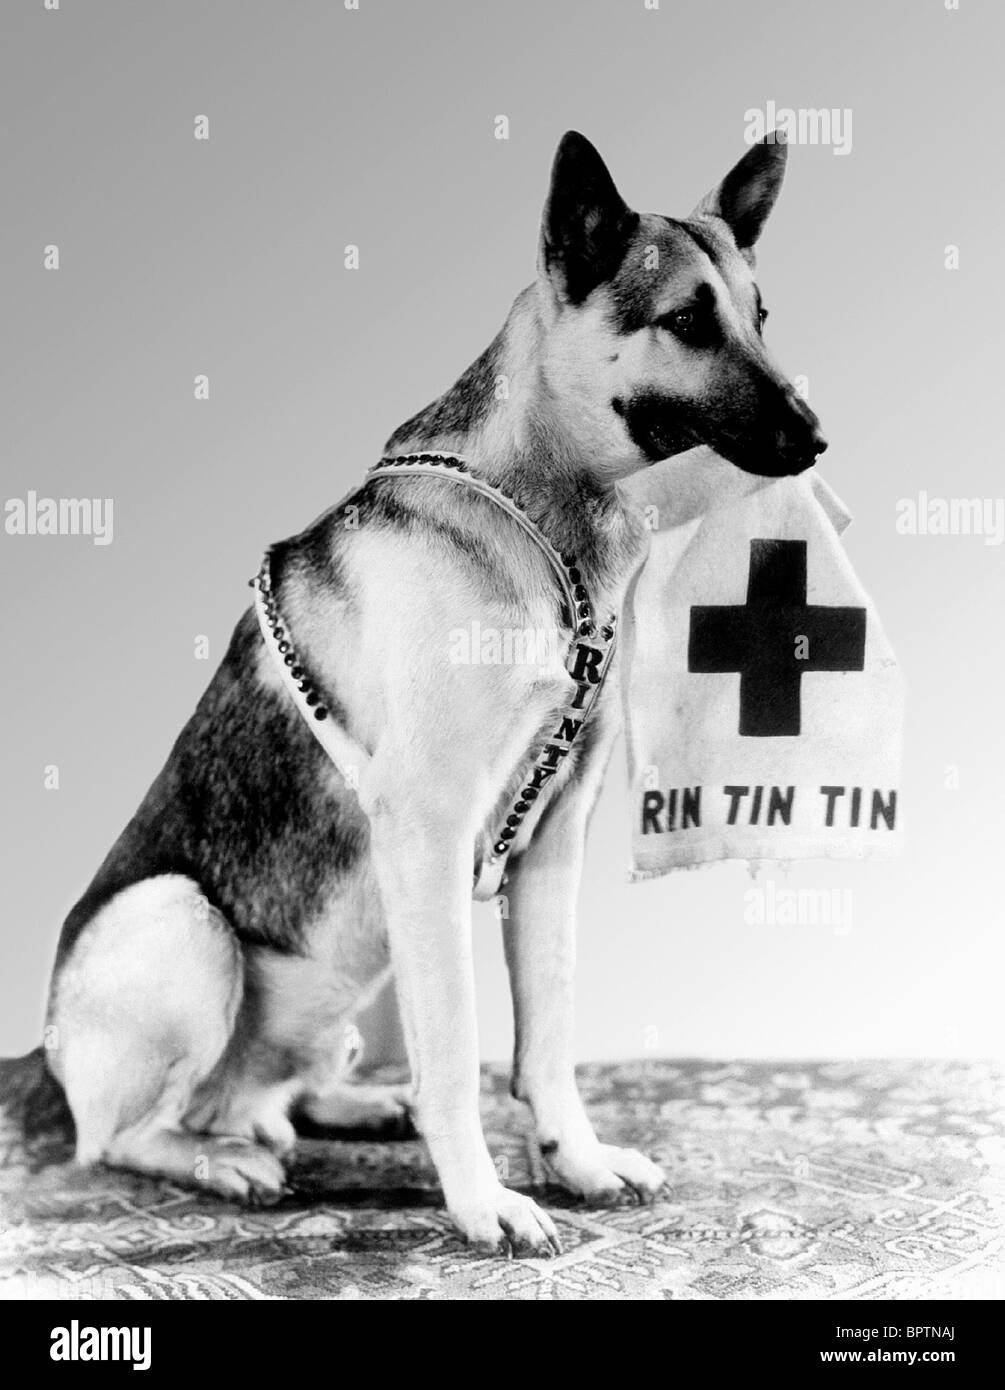 Acteur CHIEN RIN TIN TIN (1947) Banque D'Images